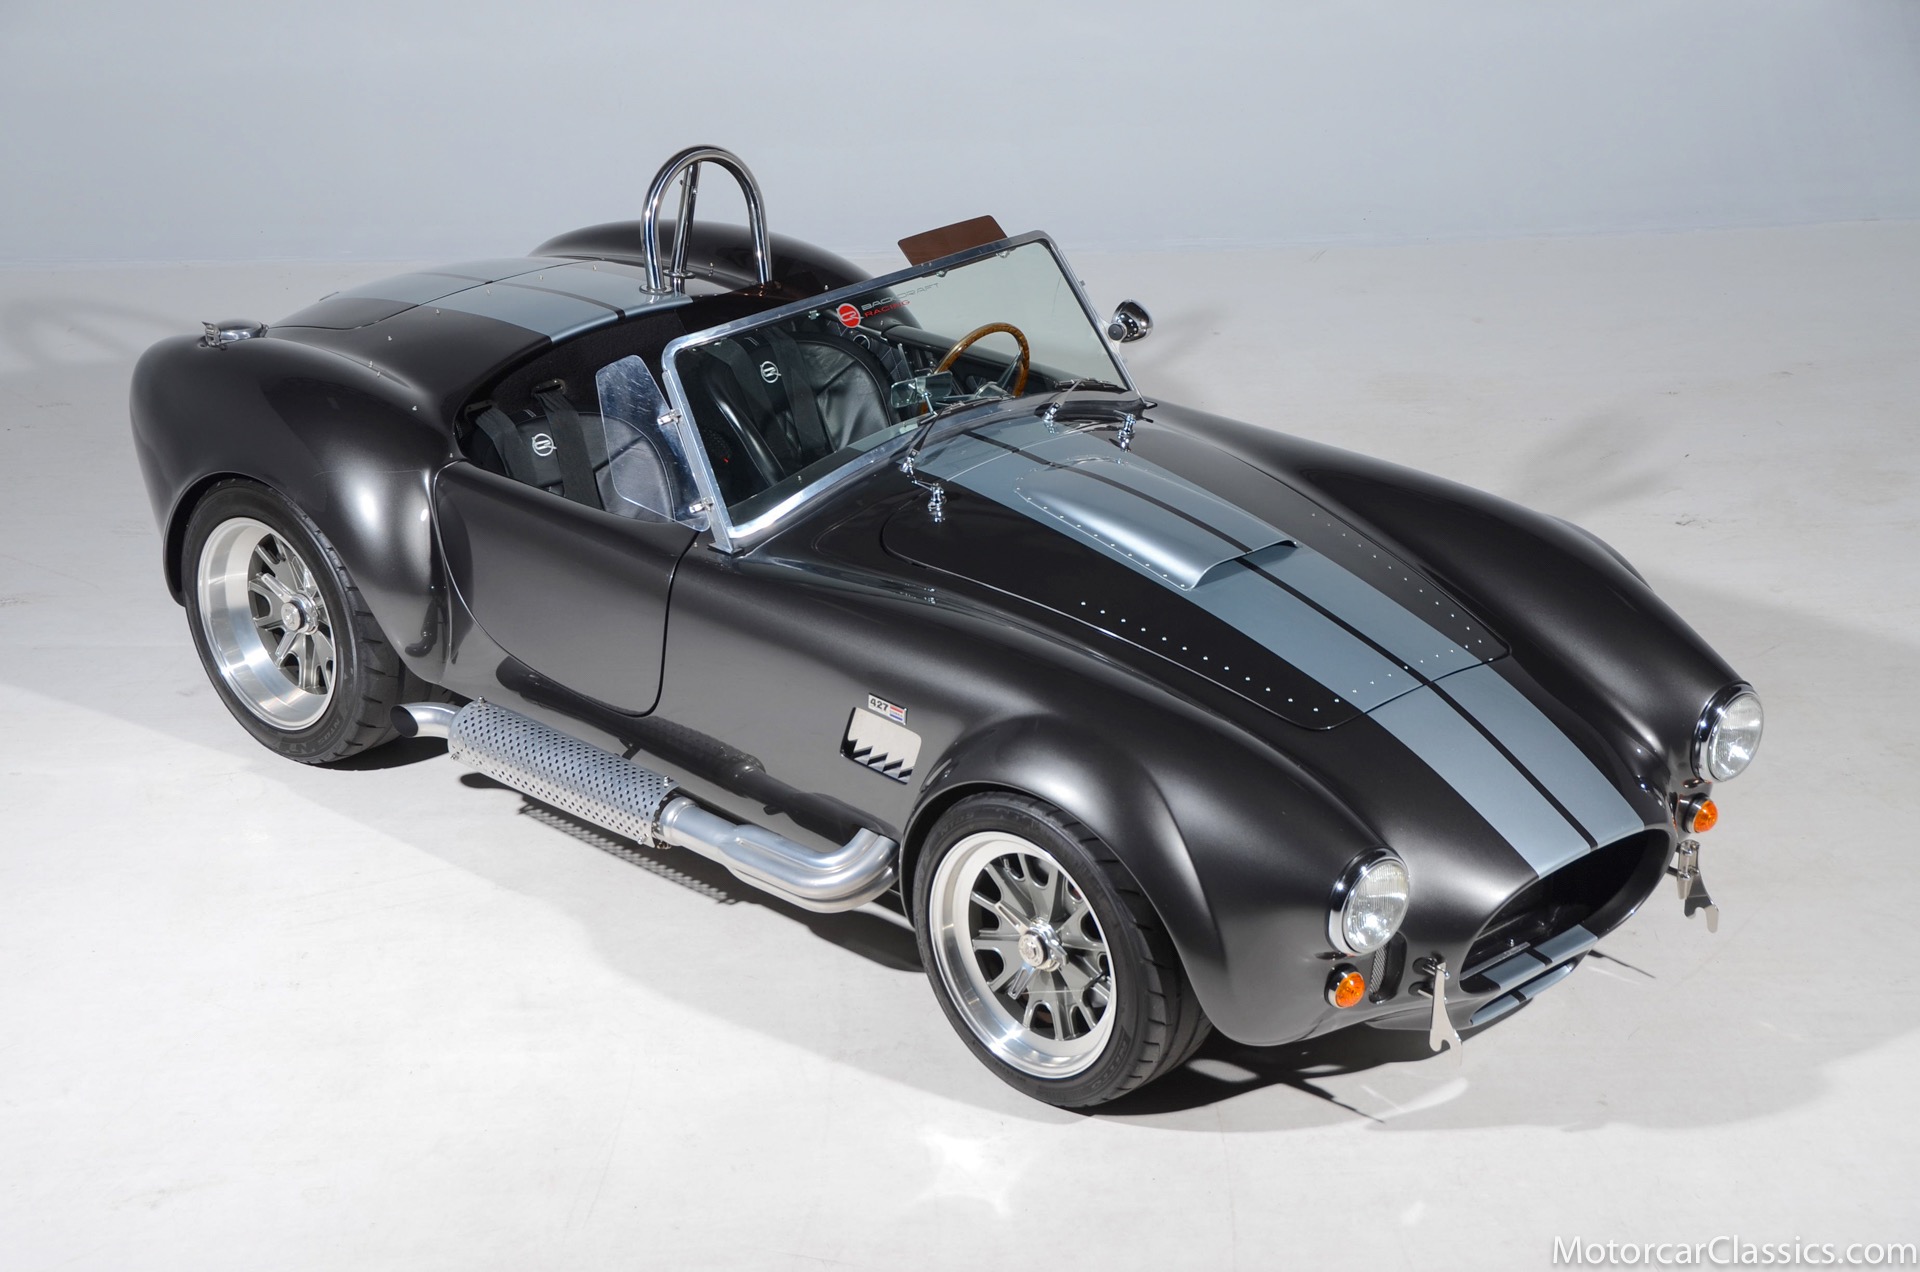 1965 Shelby Cobra 